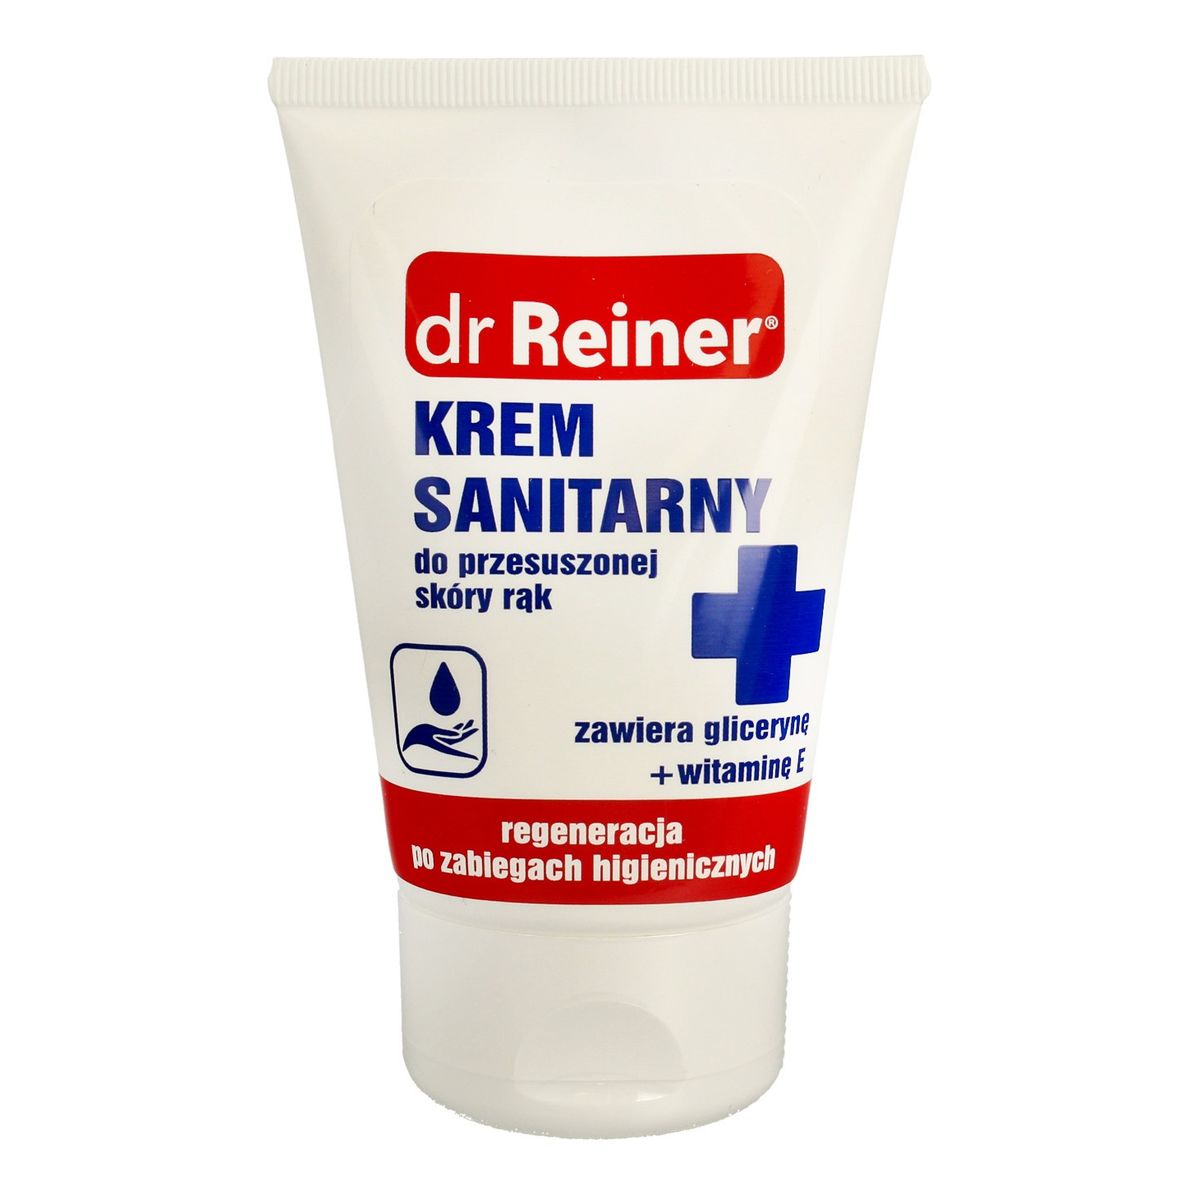 dr Reiner Krem sanitarny do przesuszonej skóry rąk 100ml